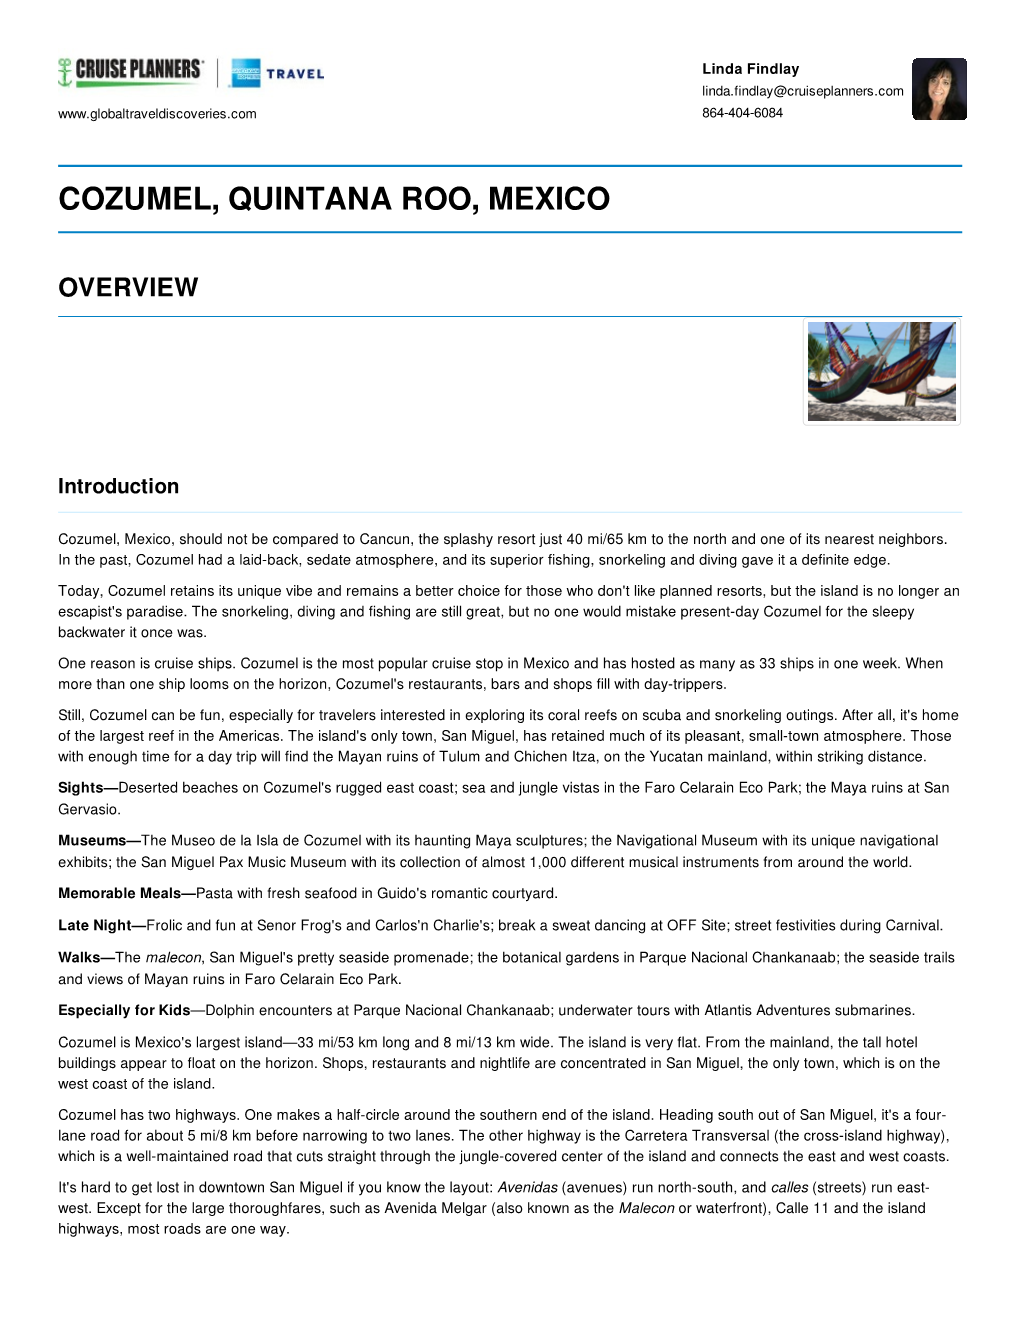 Cozumel, Quintana Roo, Mexico Overview